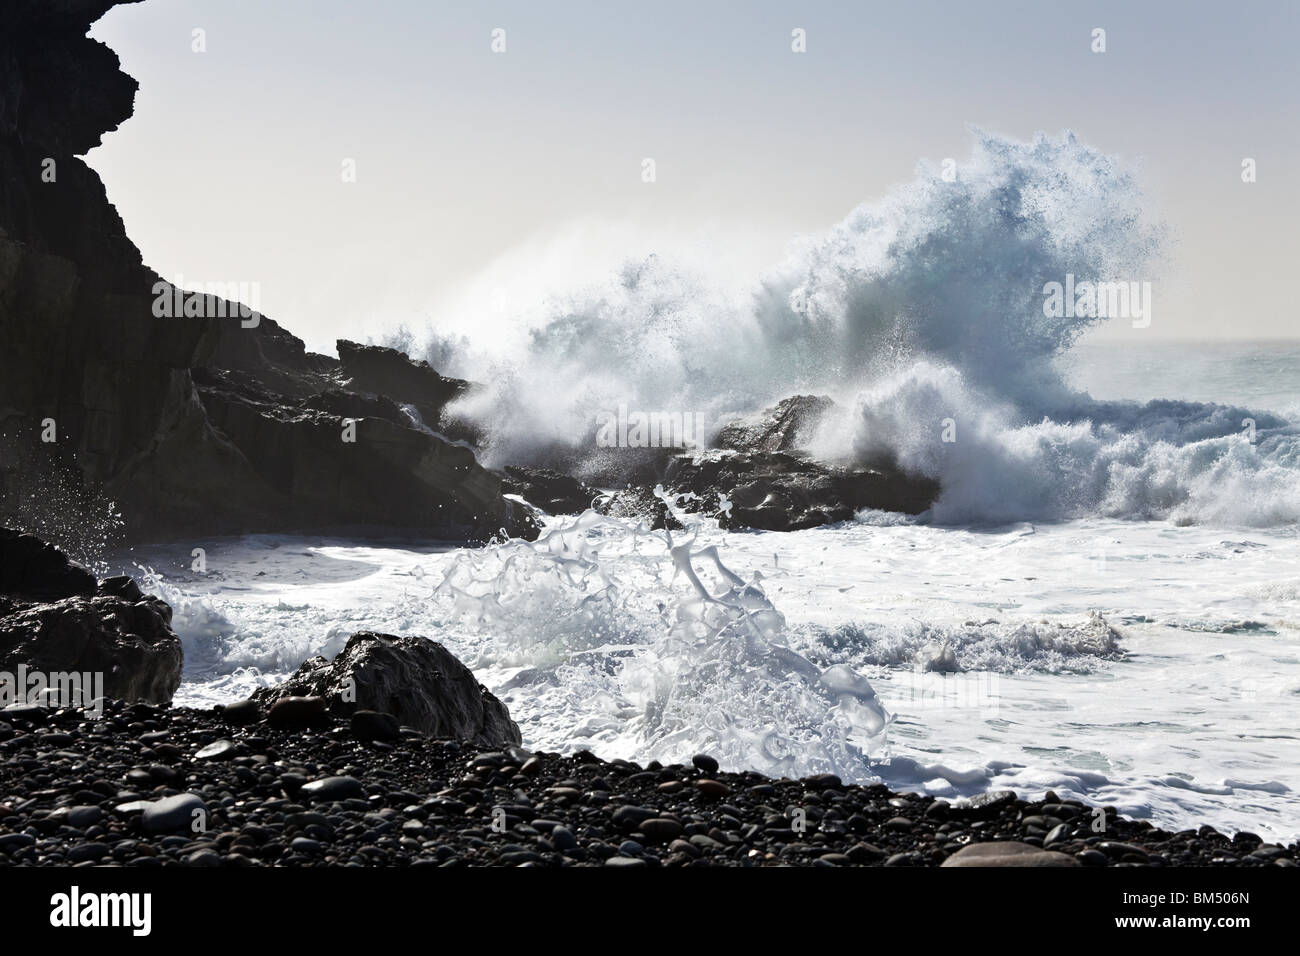 Heavy Atlantic seas with large waves crashing onto the beach at Ajuy on the Canary Island of Fuerteventura Stock Photo